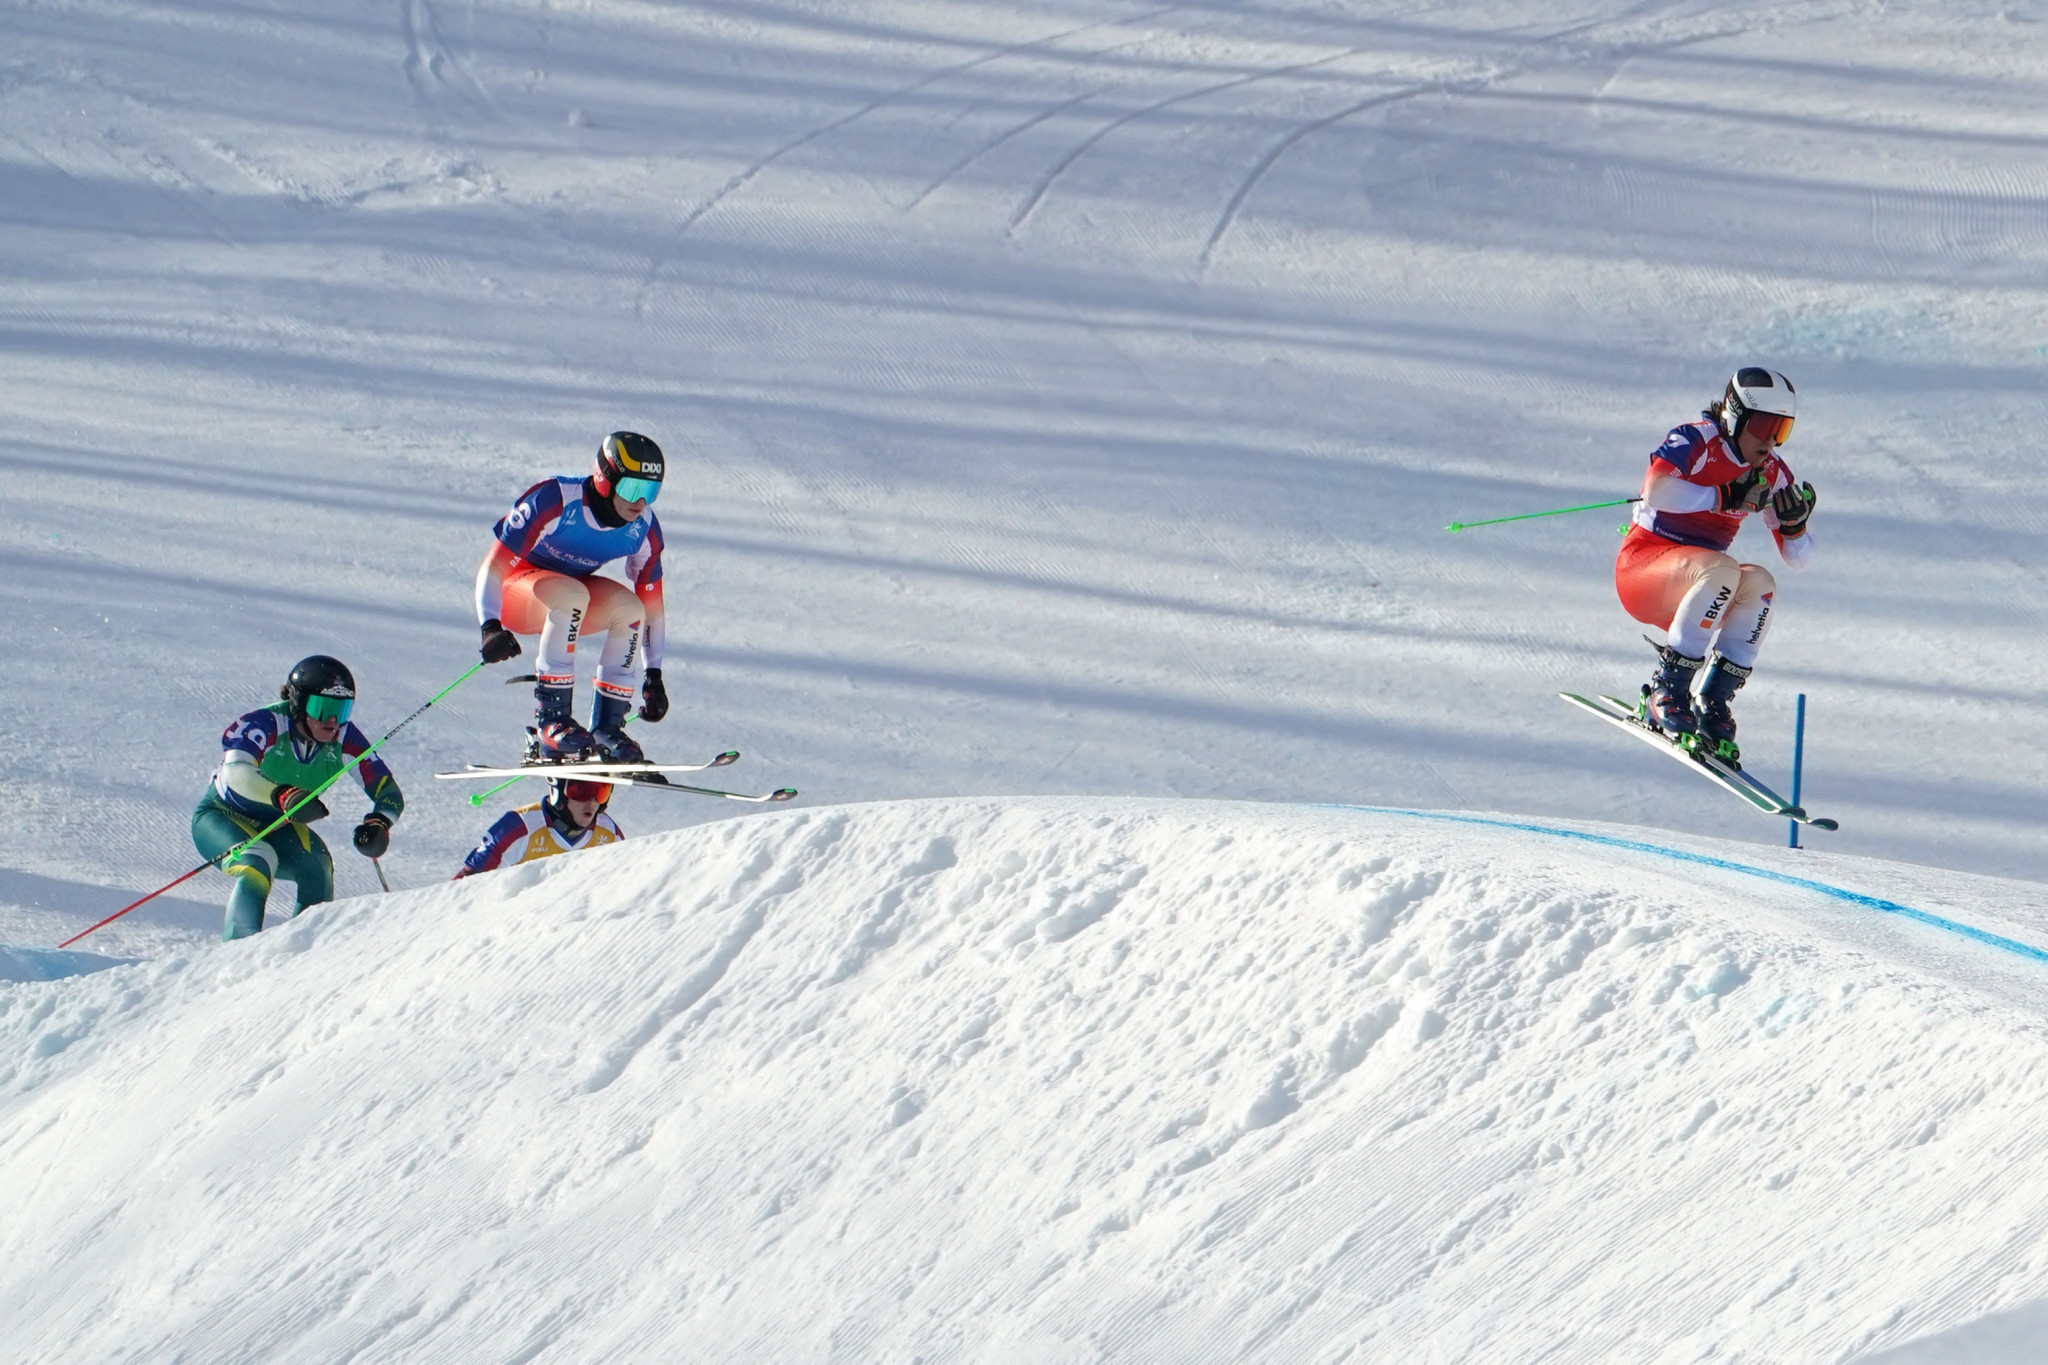 Britian's Scott Johns leads the way in the men's ski cross final ©FISU